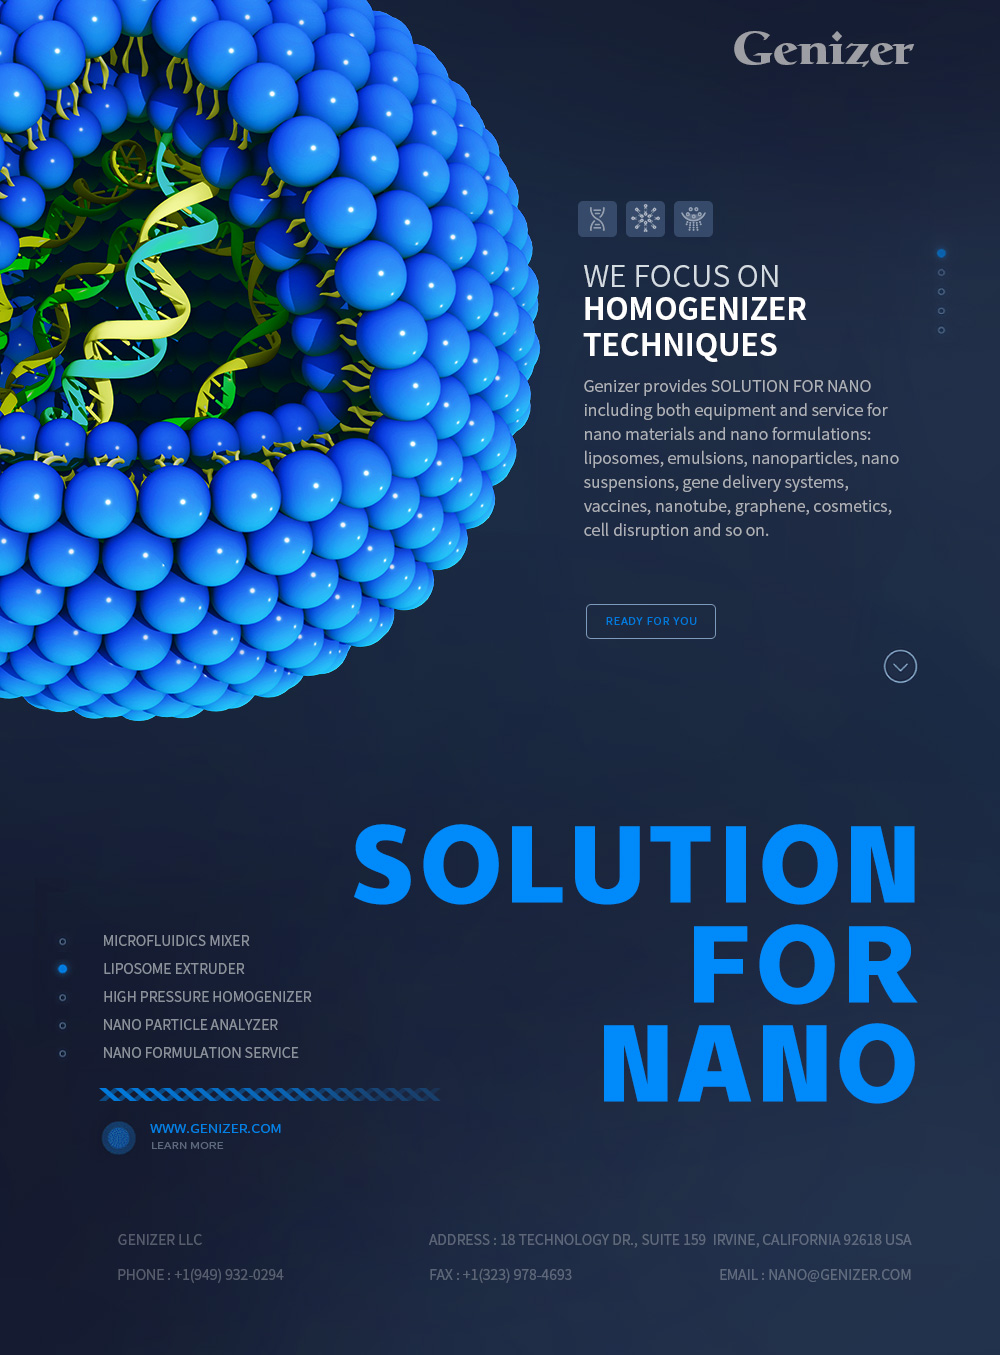 GenizerTM provides SOLUTION FOR NANO